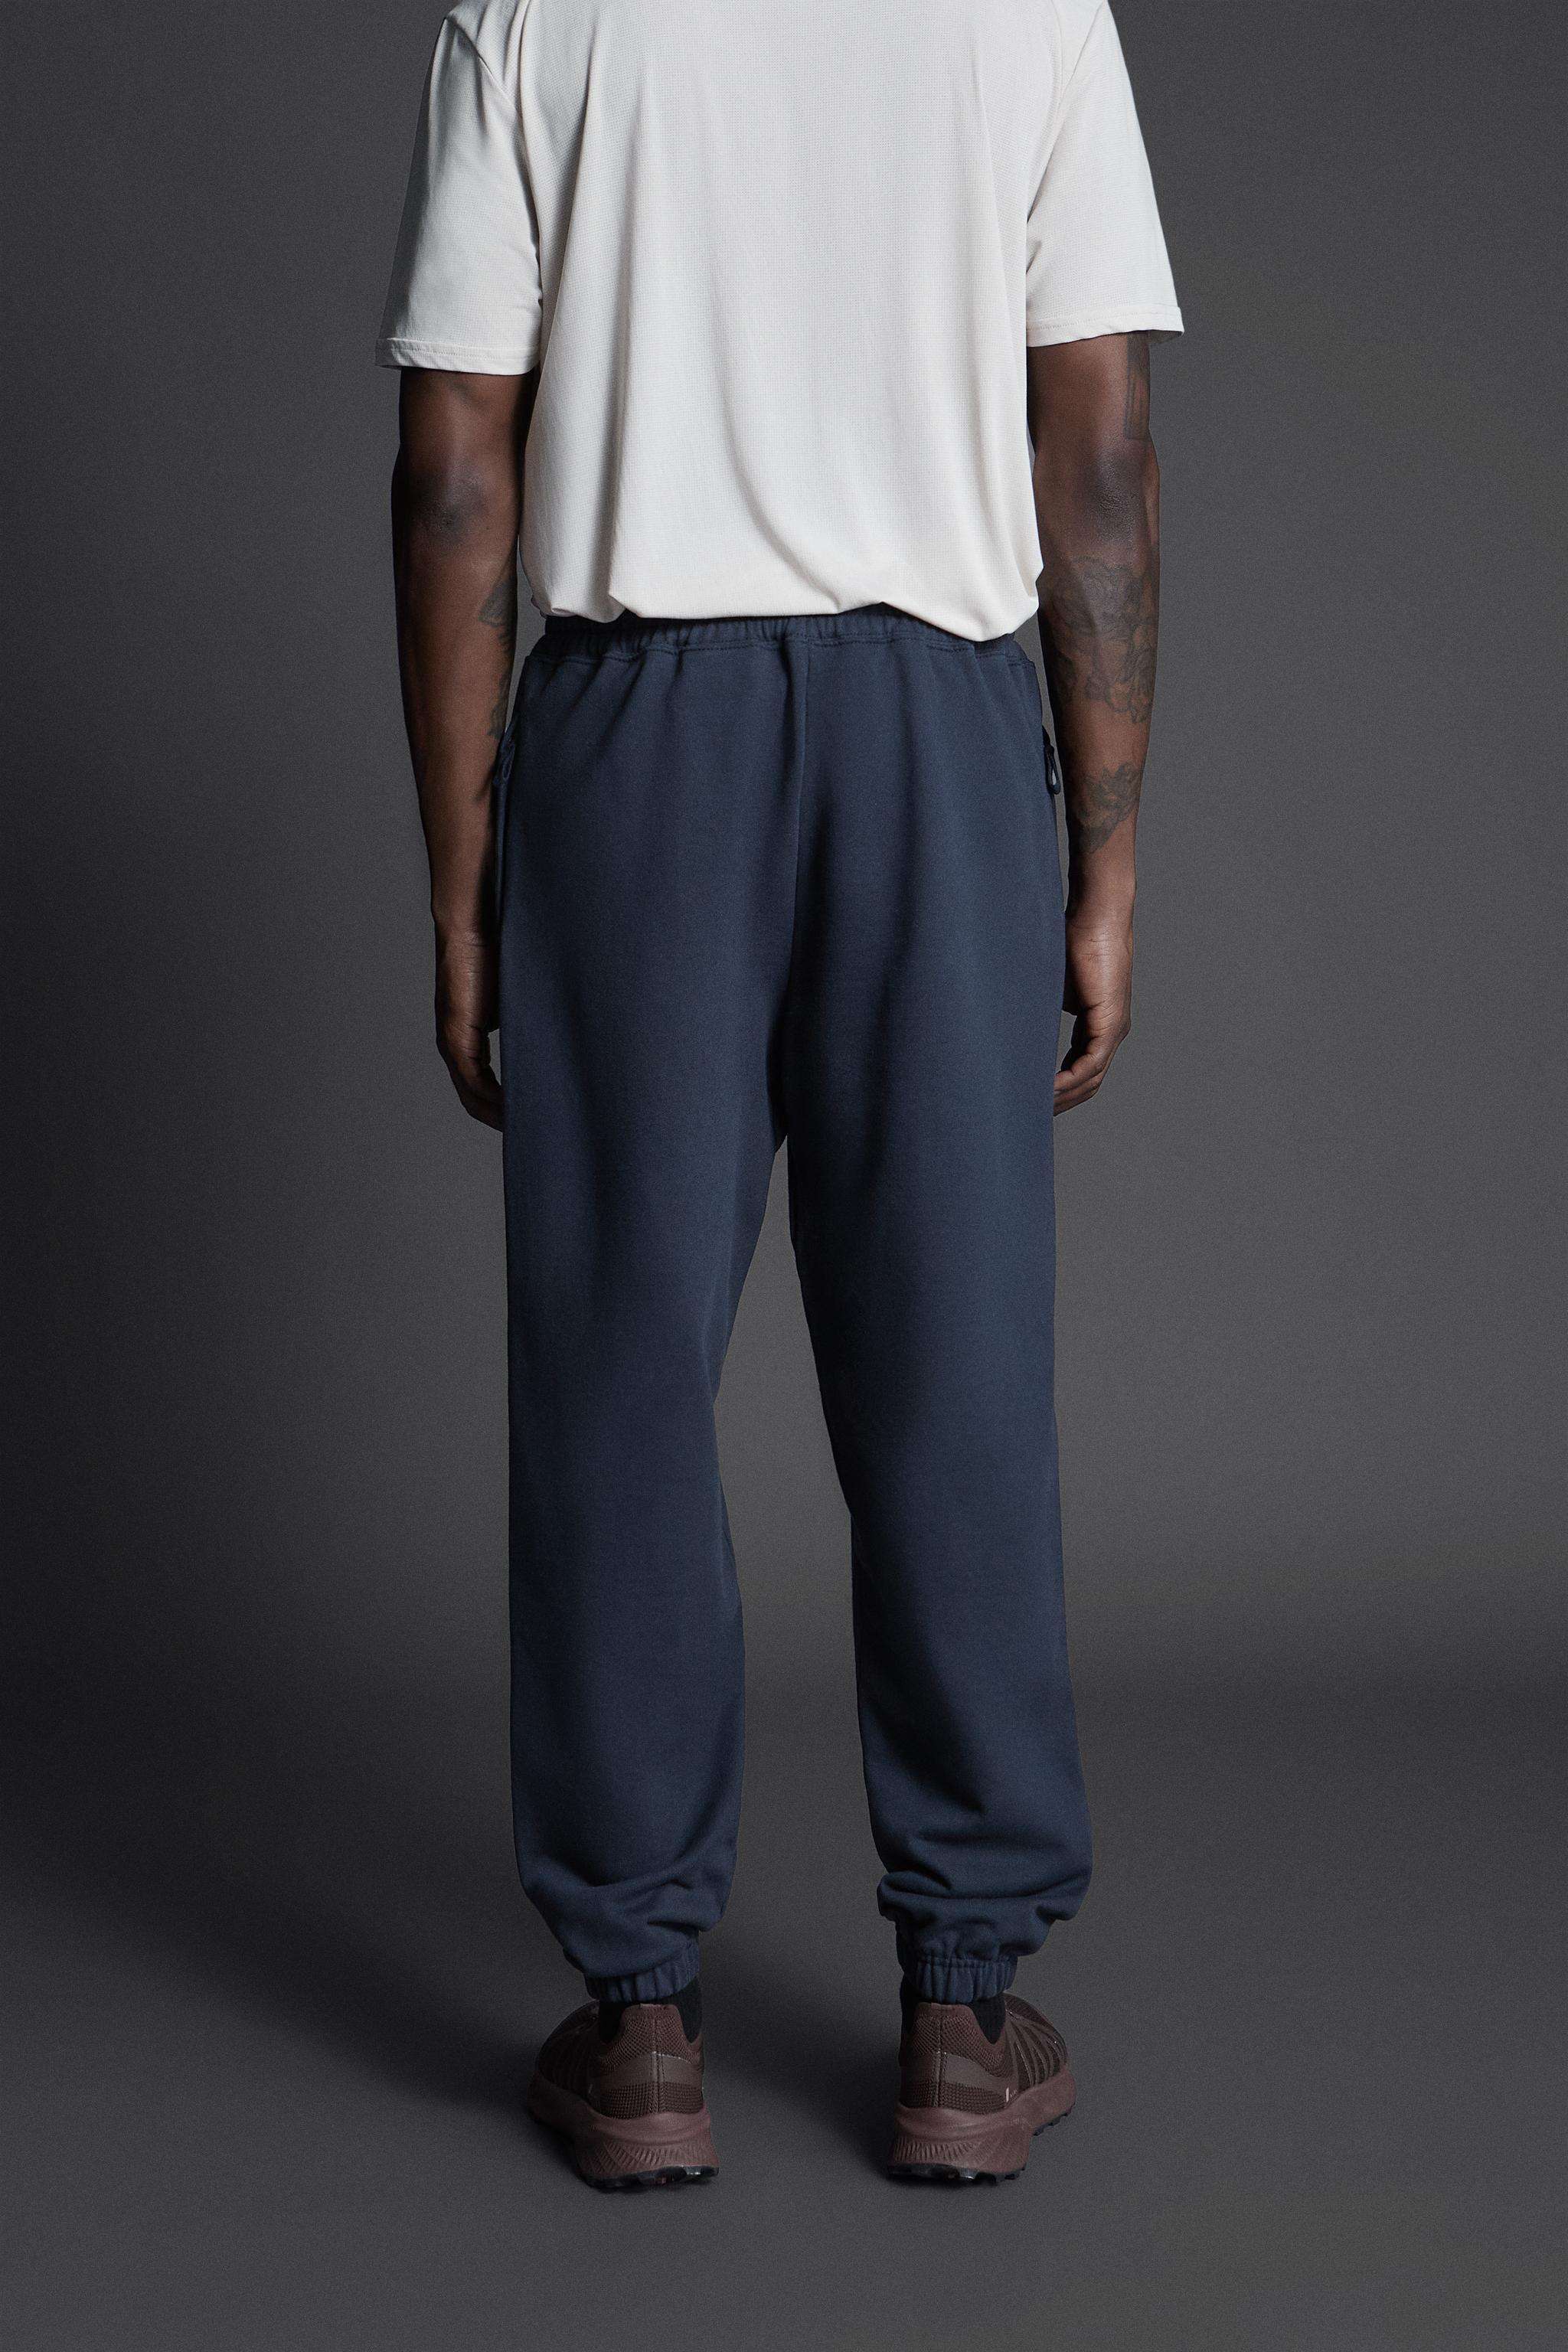 Zara Men's Navy Blue Joggers Sweatpants Tie Waist Size XL